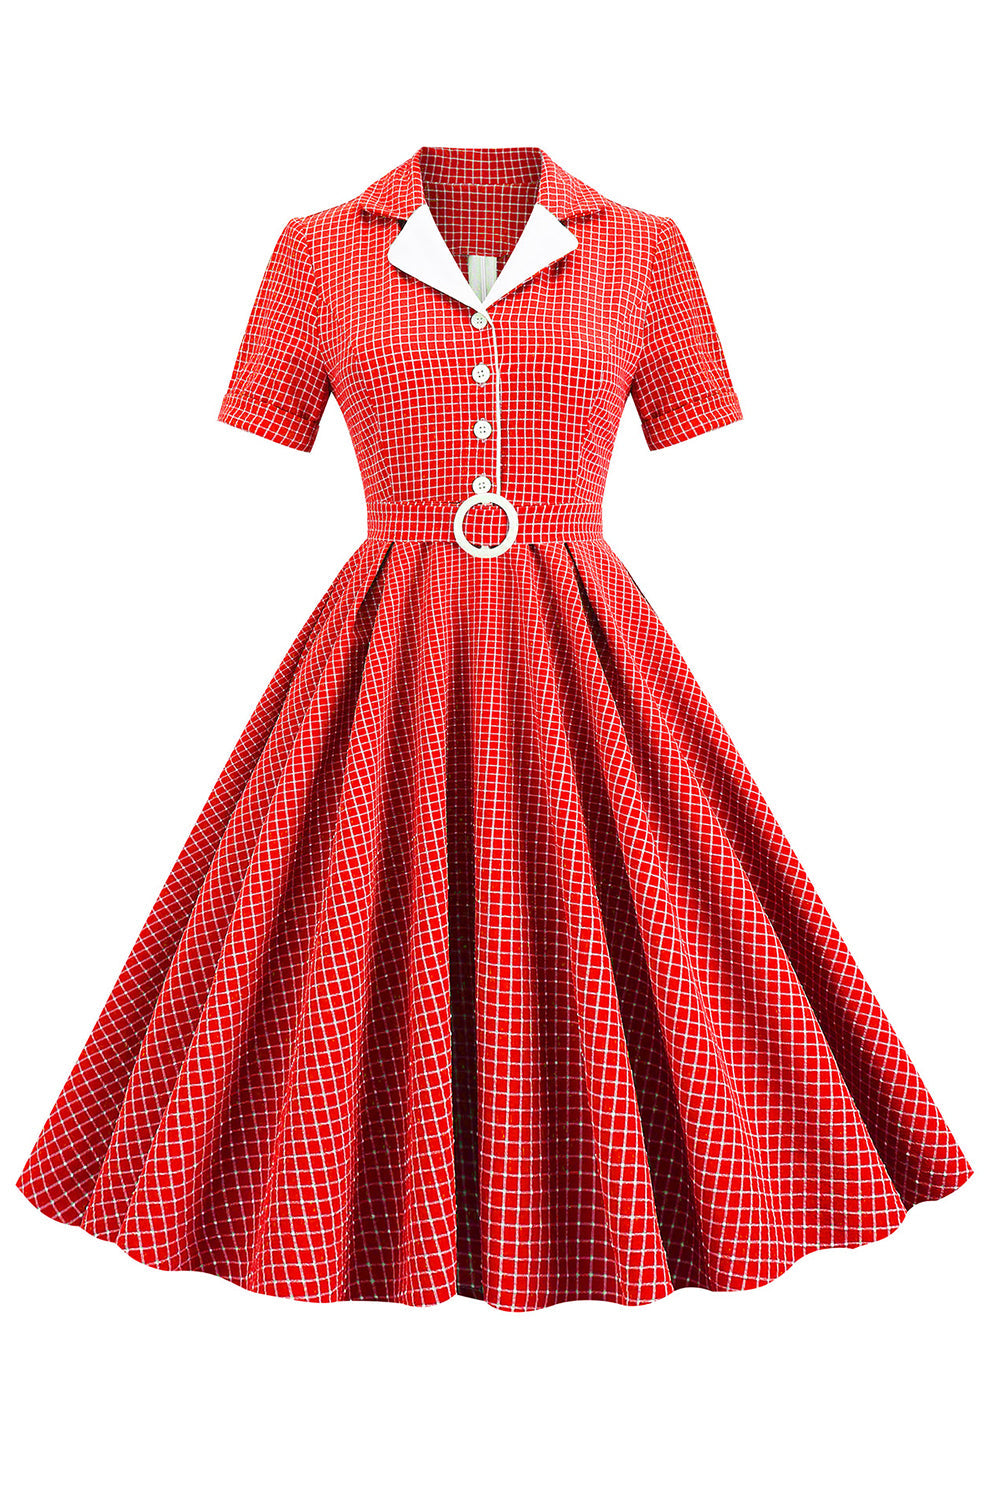 Retro Style Red Plaid 1950s Dress